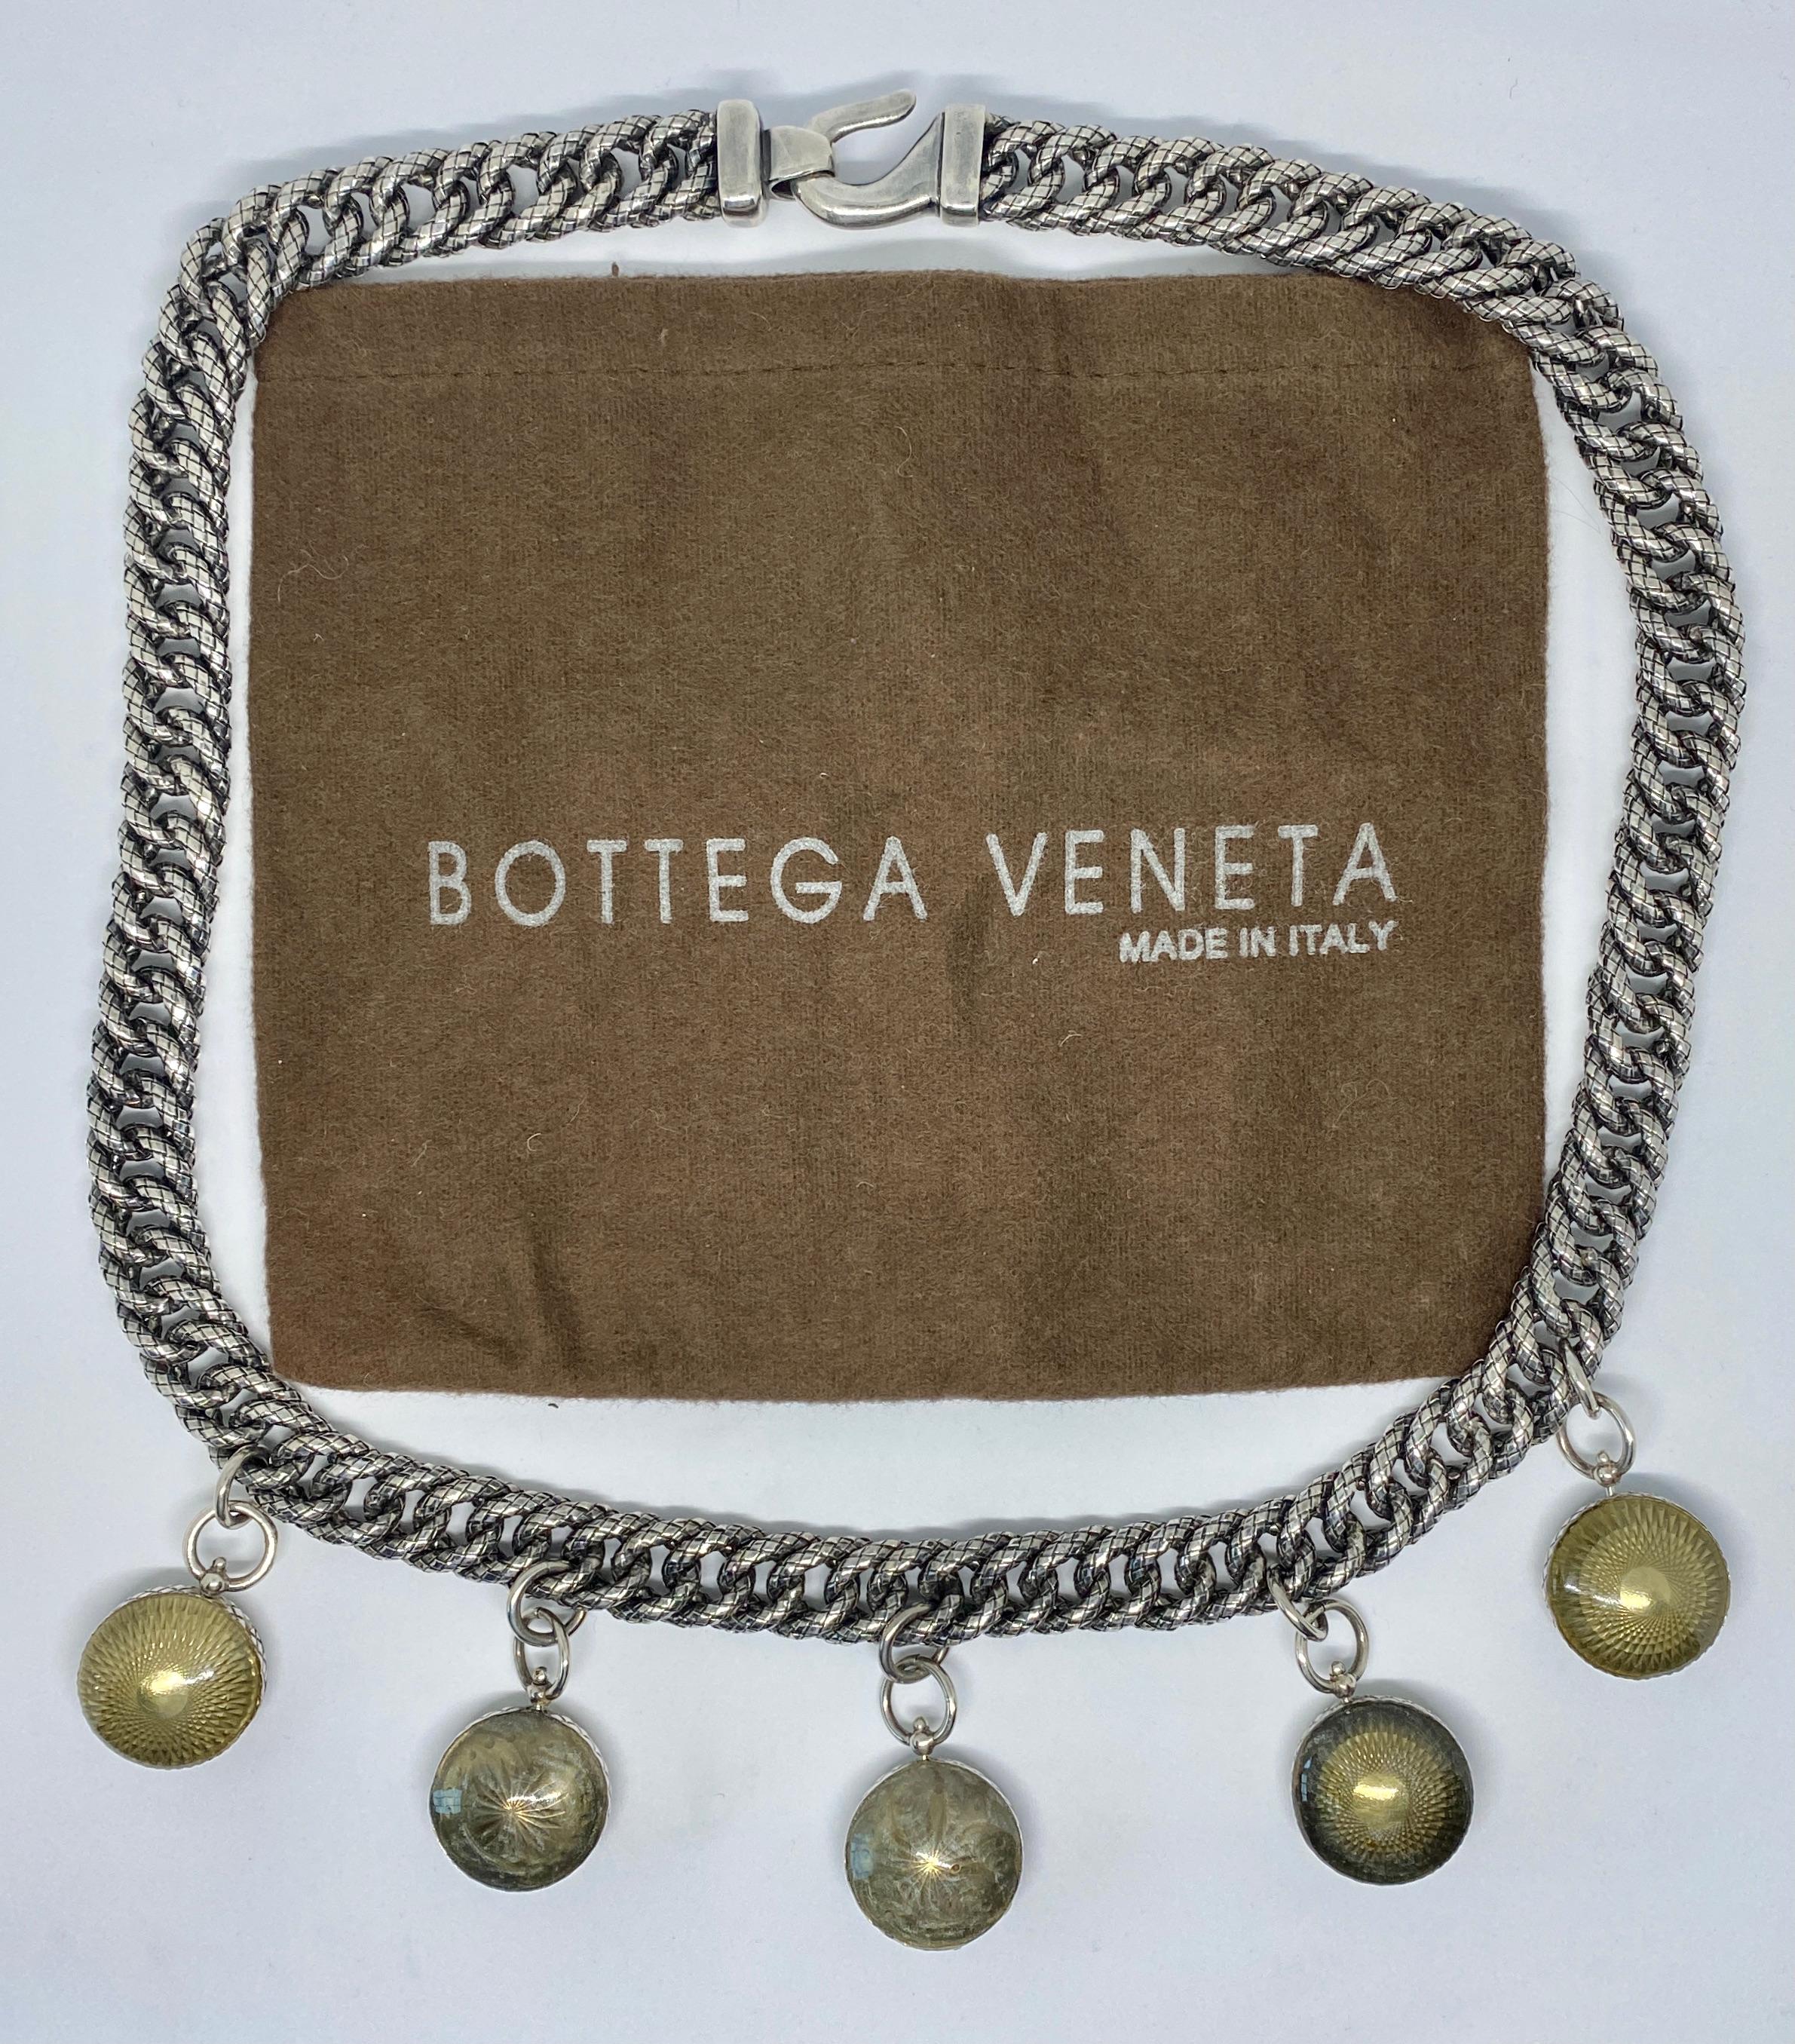 Contemporain Bottega Veneta Collier Intrecciato en argent sterling oxydé avec médaillons en vente